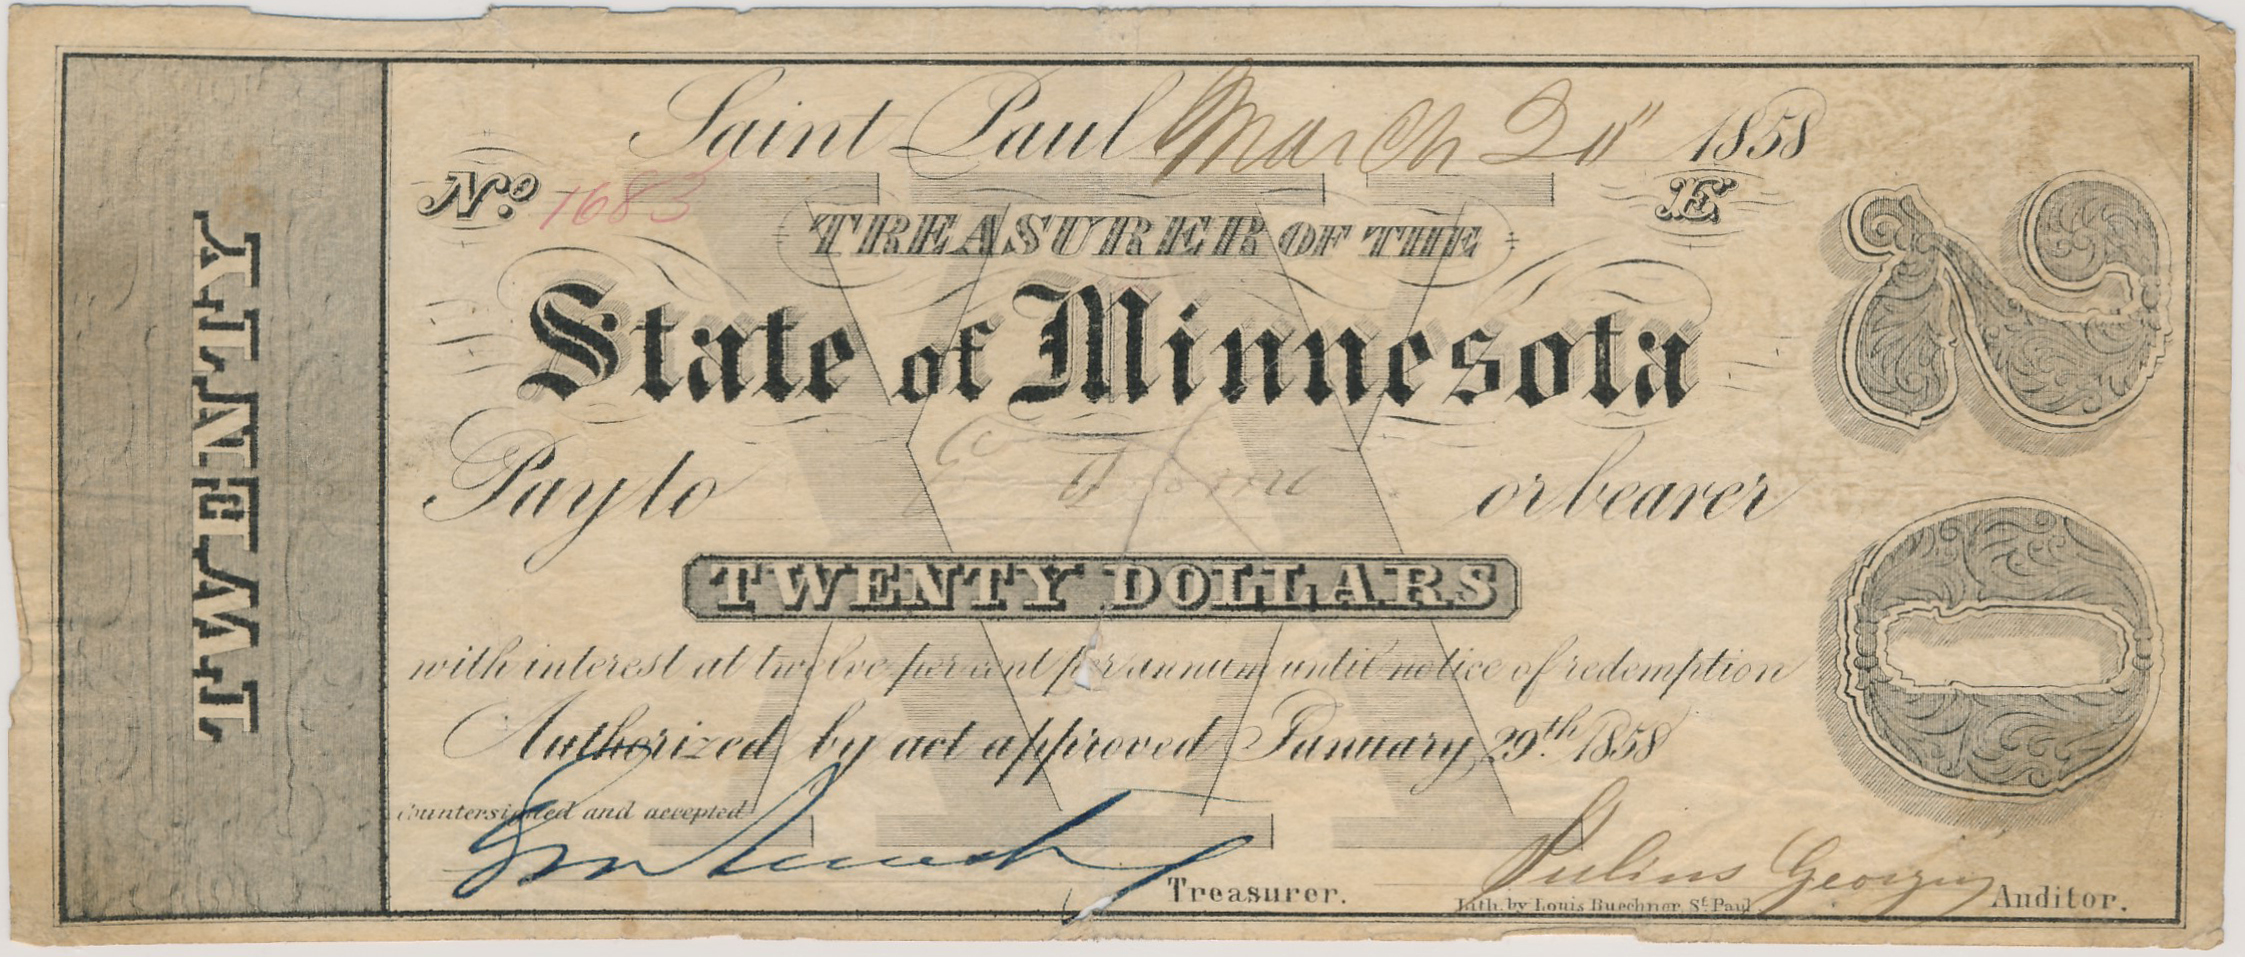 $20 Treasurer of the State of Minnesota